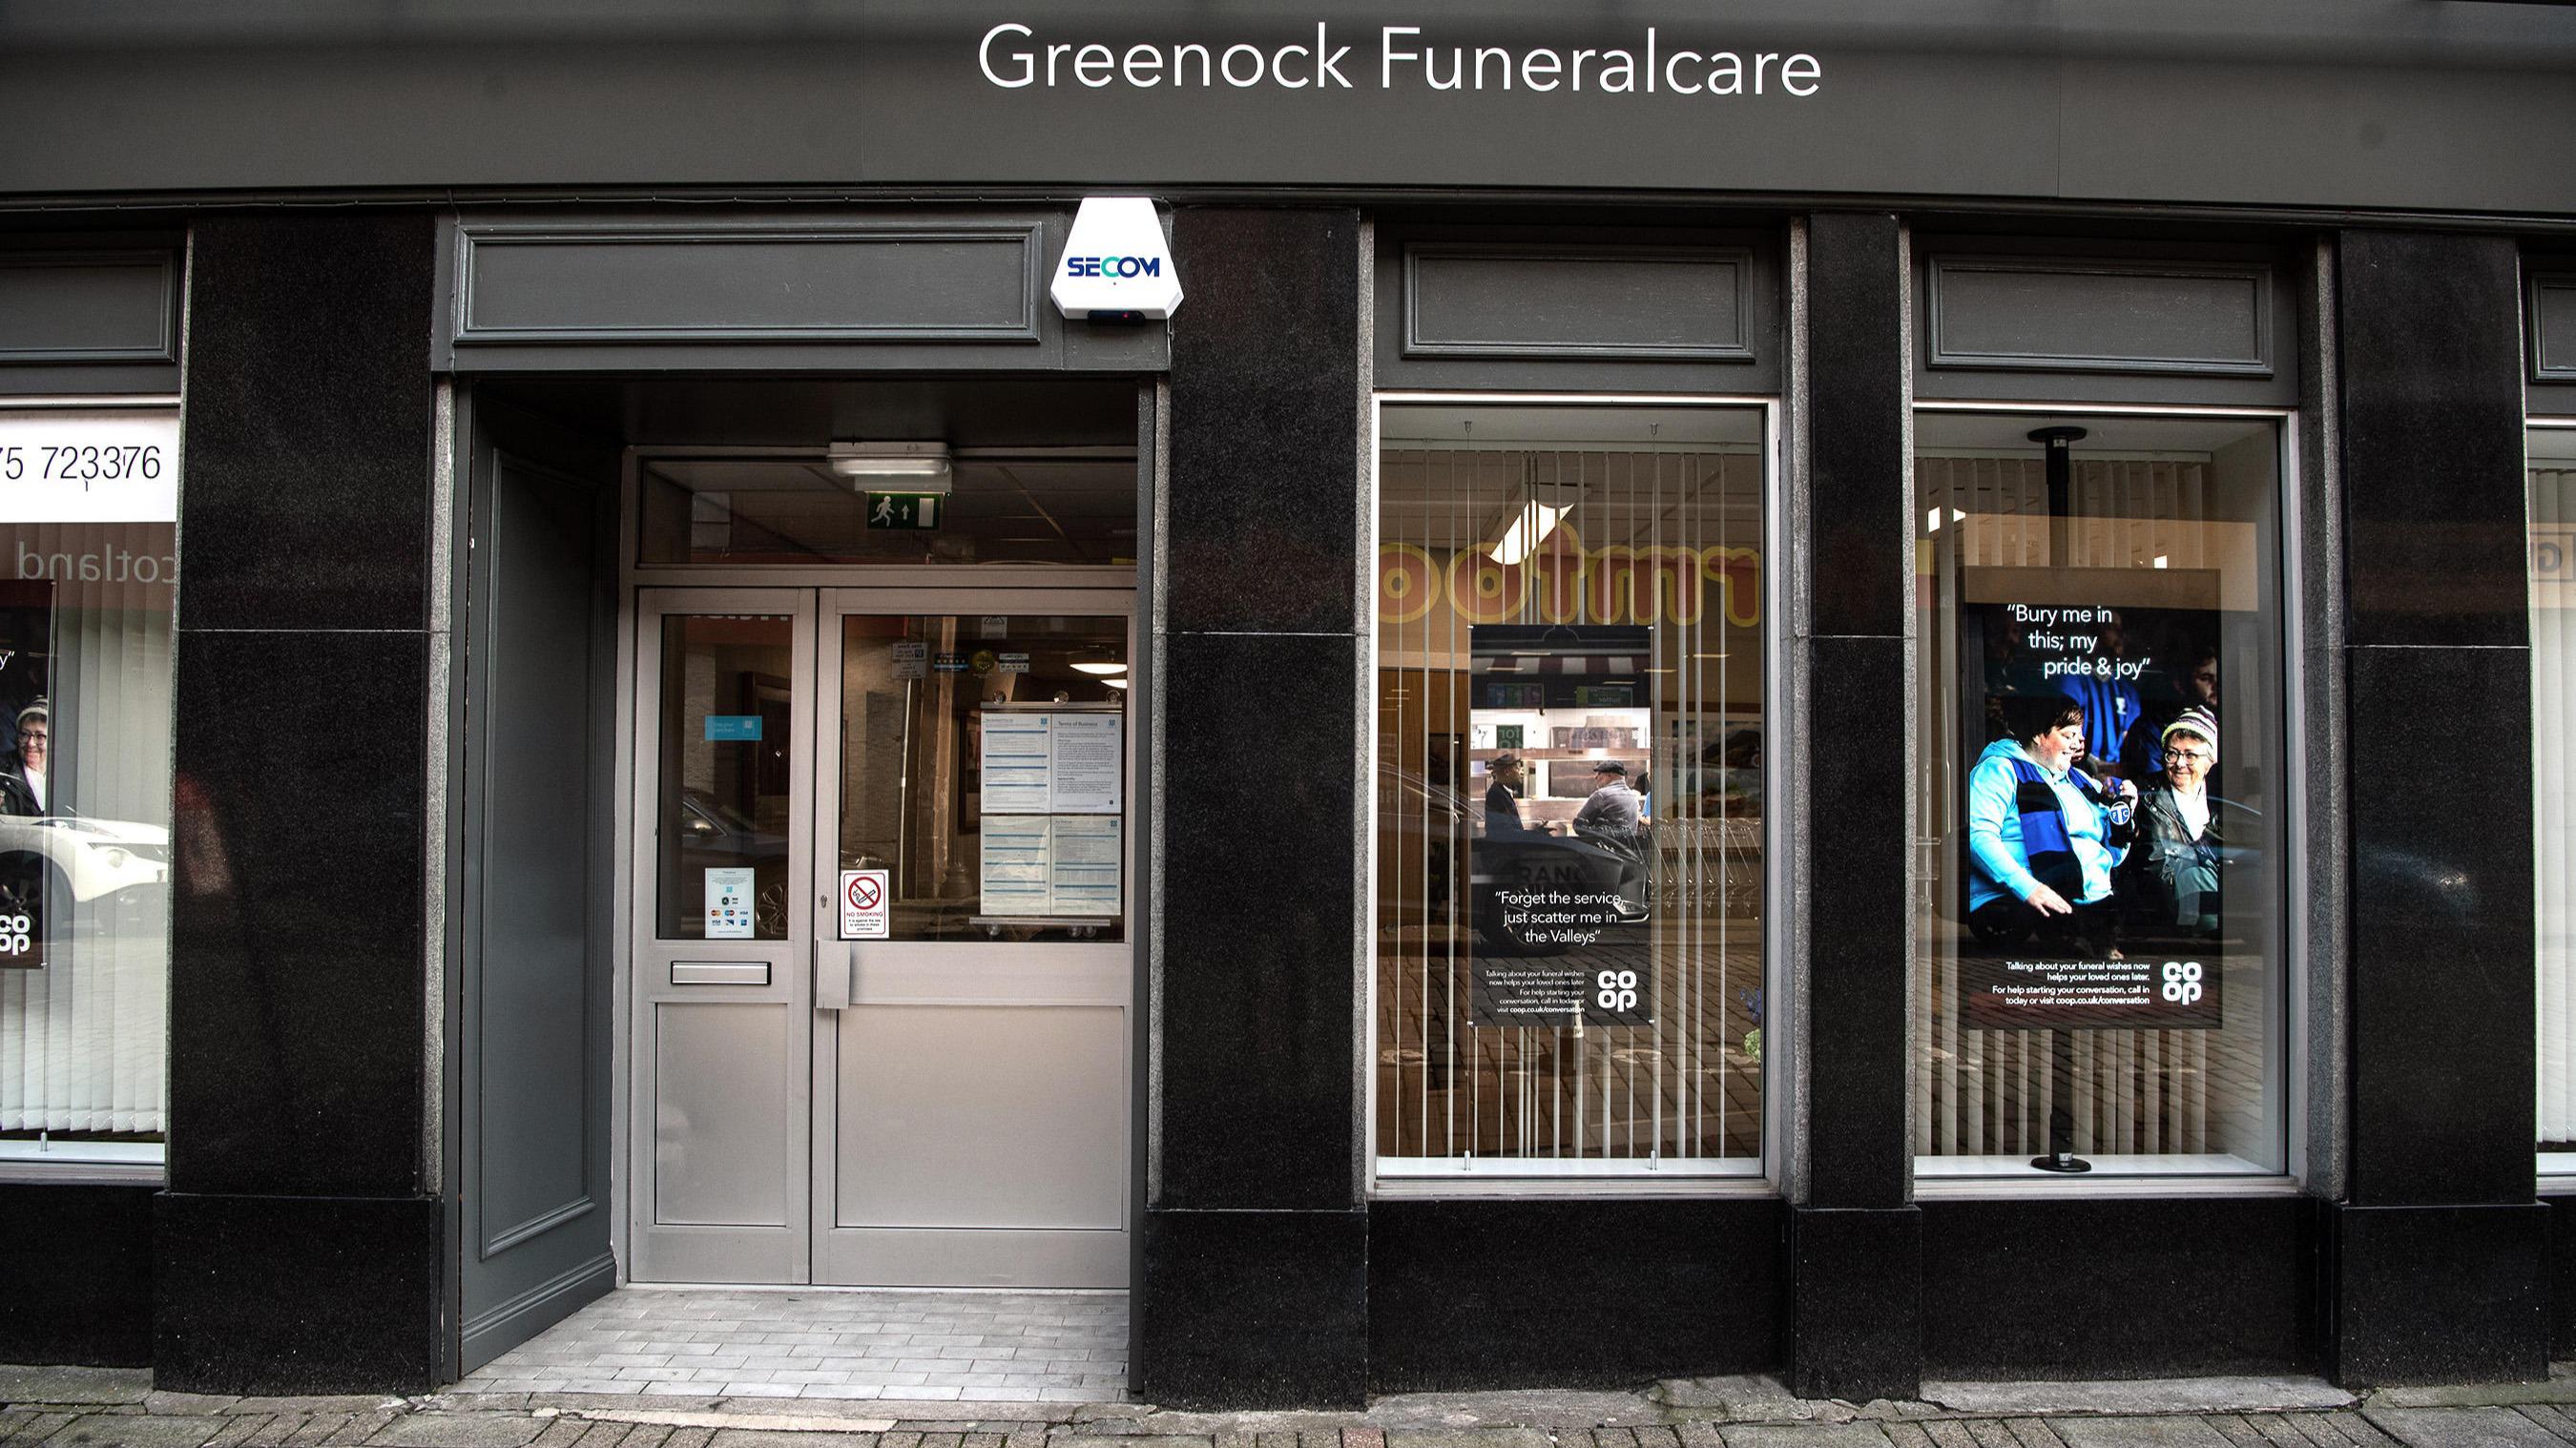 Images Co-op Funeralcare, Greenock